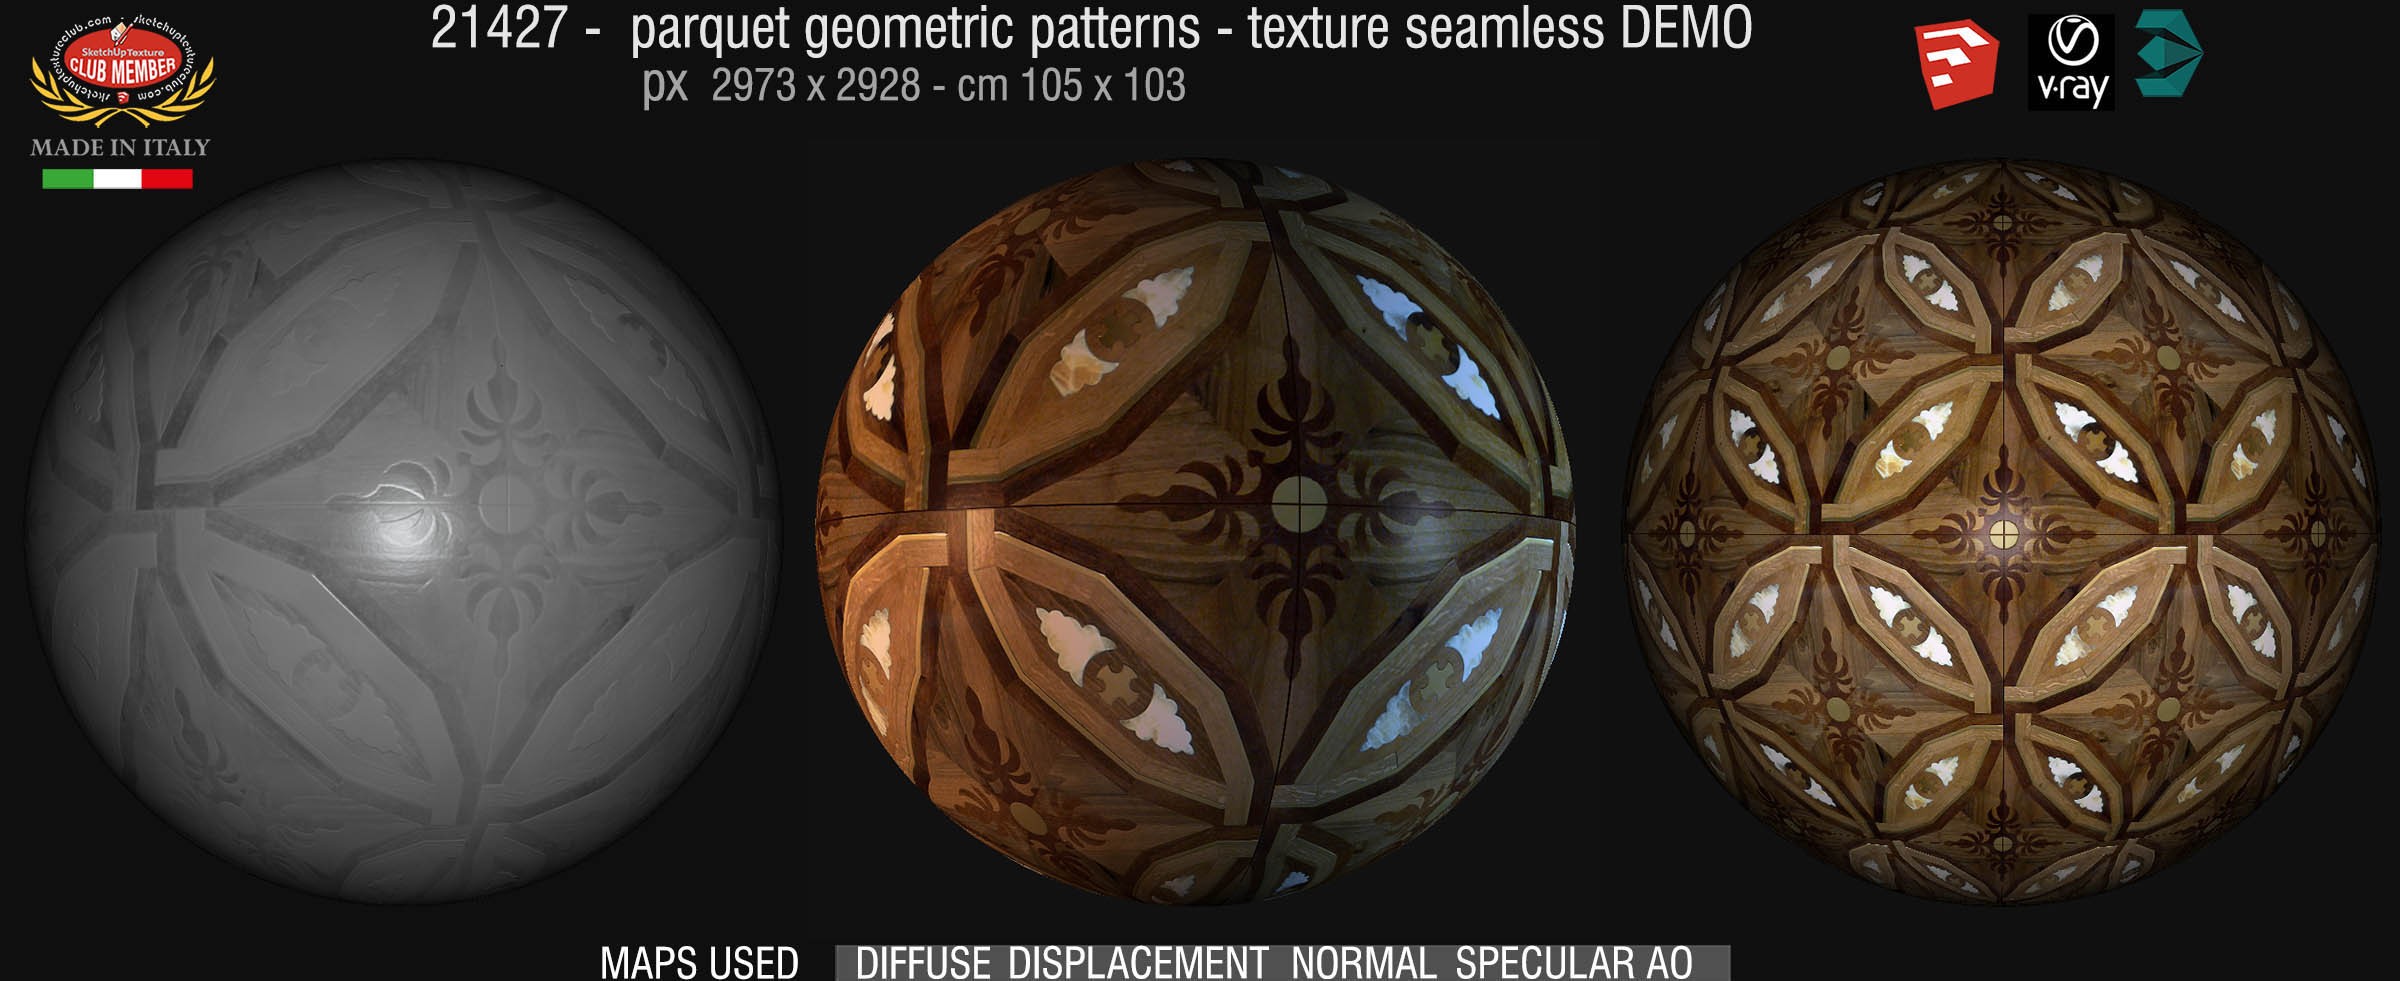 21427 parquet geometric patterns texture seamless  + maps DEMO